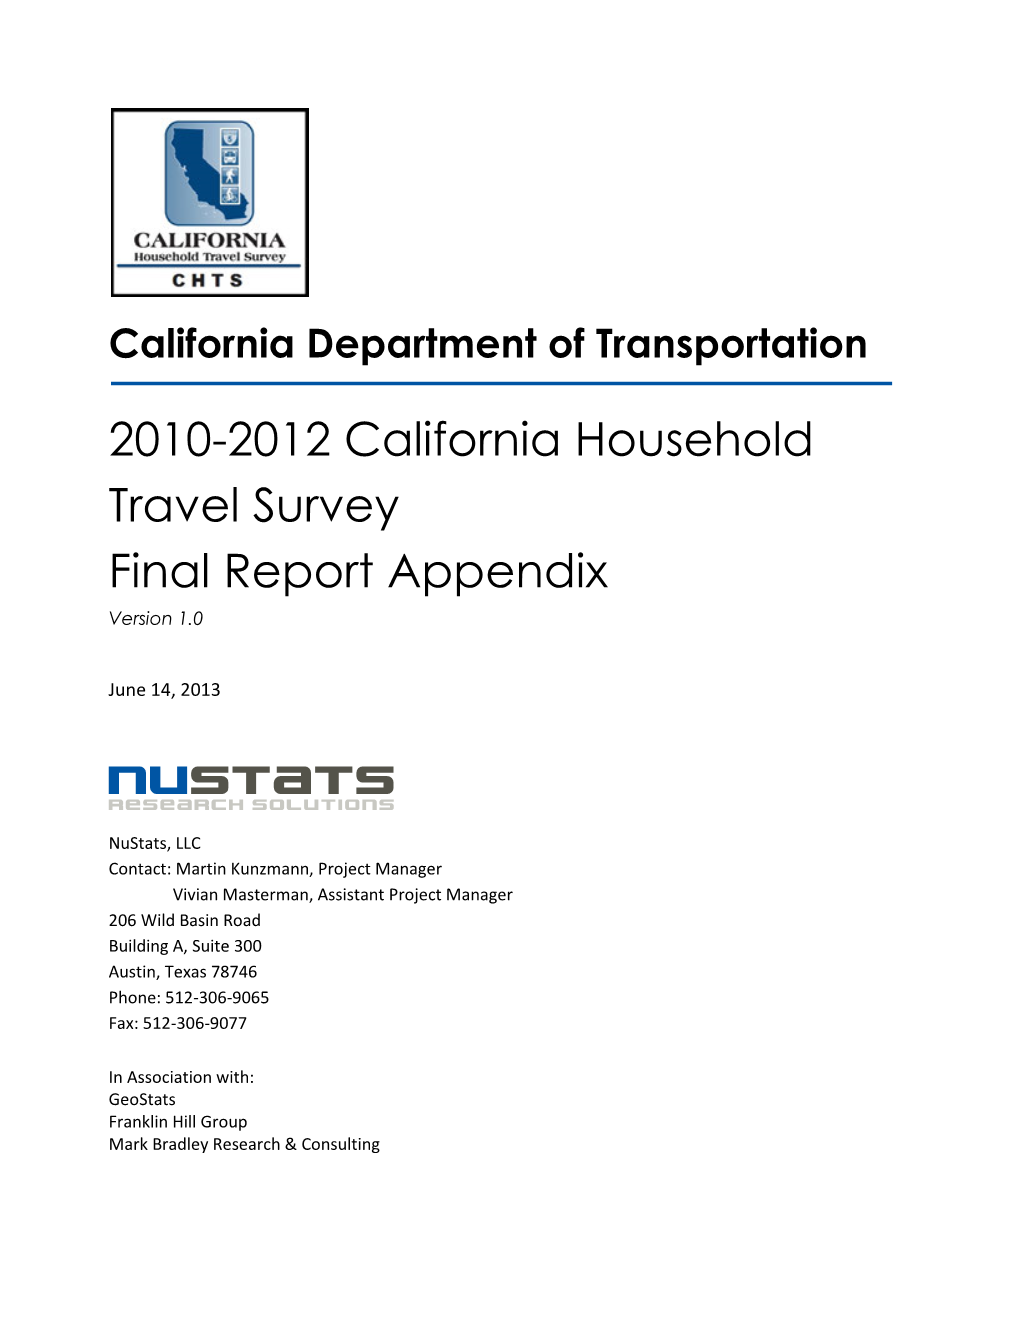 2010-2012 California Household Travel Survey Final Report Appendix Version 1.0